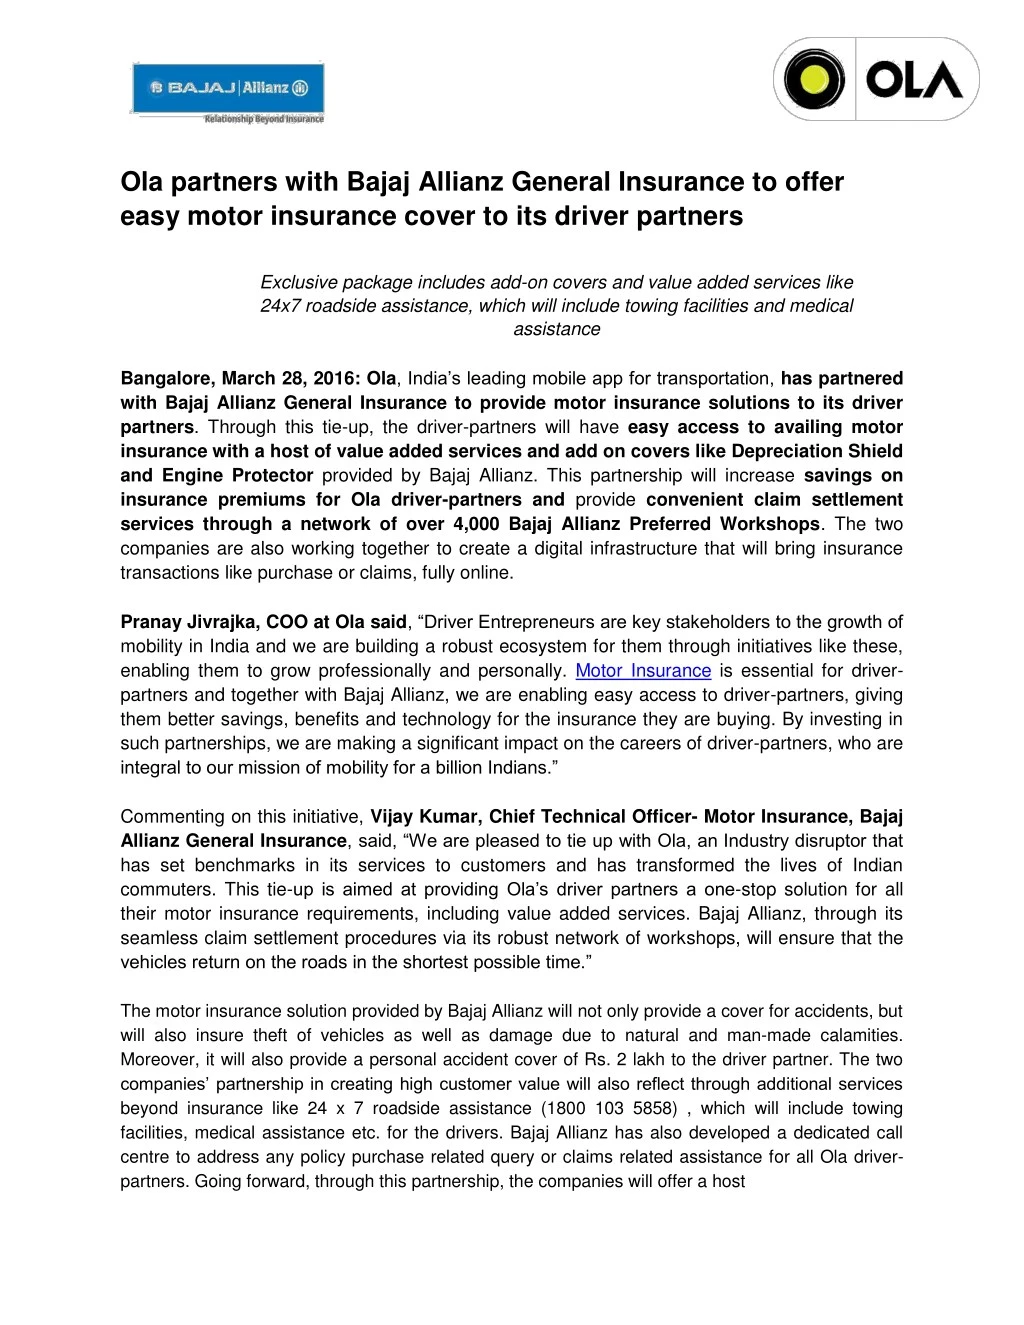 ola partners with bajaj allianz general insurance